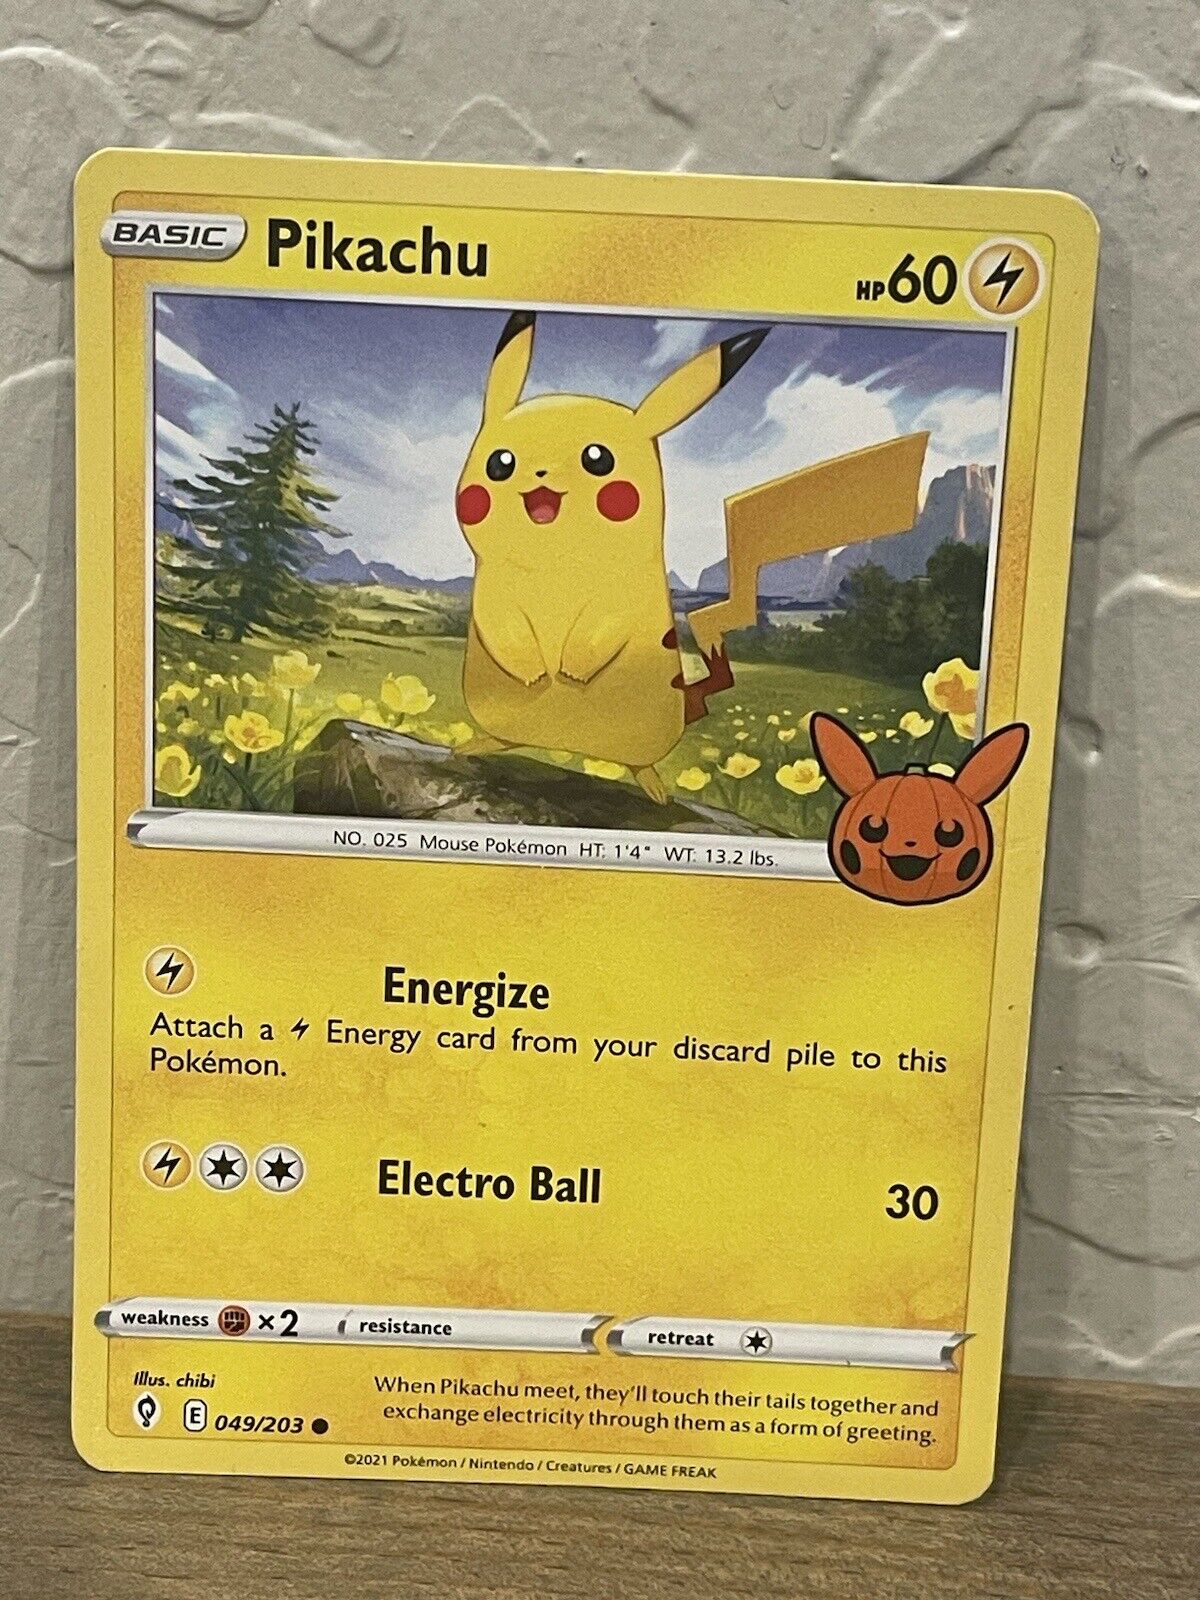 2021 Pokemon Card Basic Pikachu Energize HP 60 Electro Ball 049/203